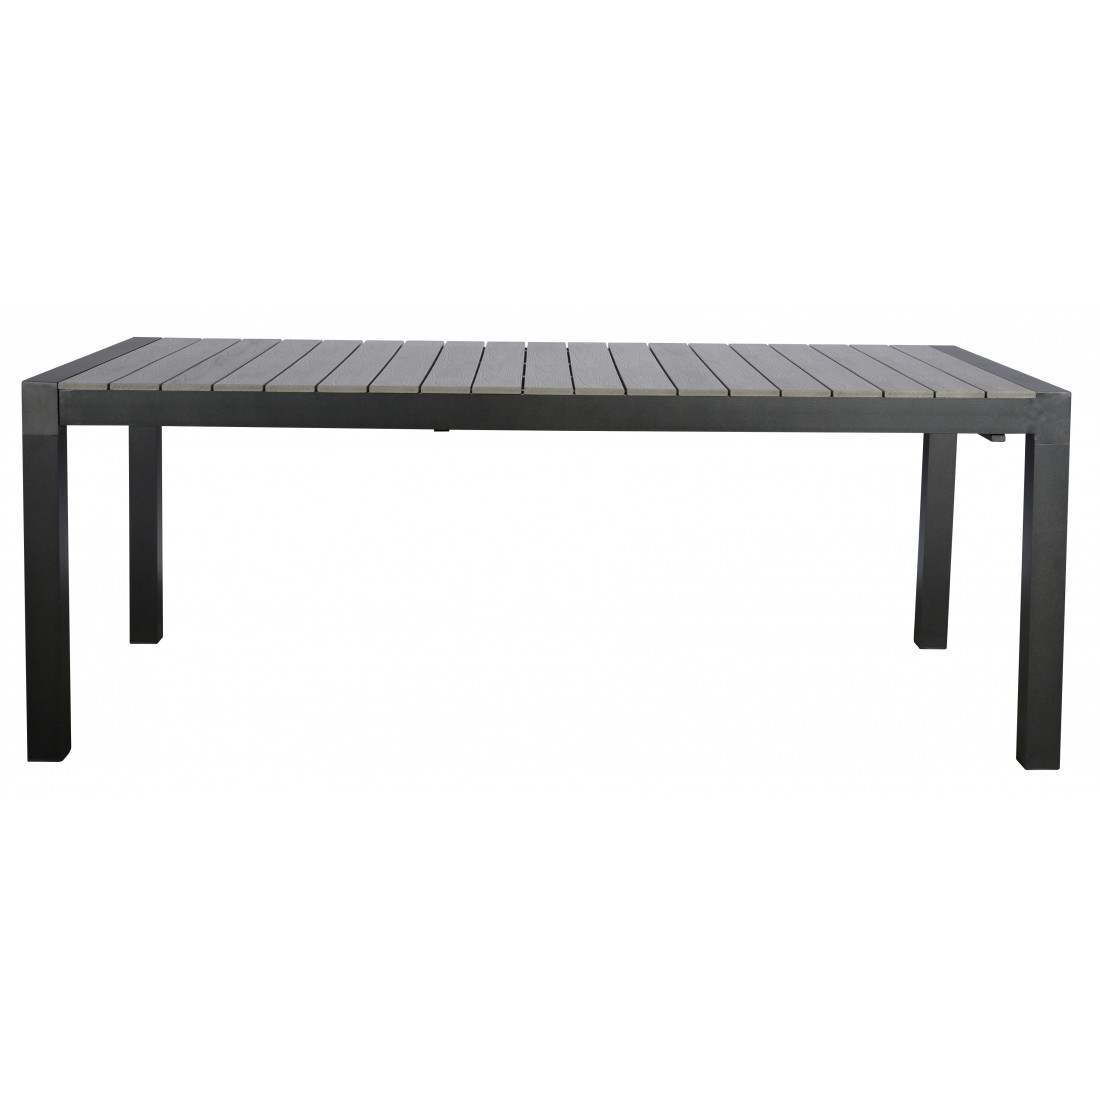 Living Outdoor - Lyoe Garden Table 205/275 x 100 cm - Aluminium/Polywood - Black/Grey (629100)